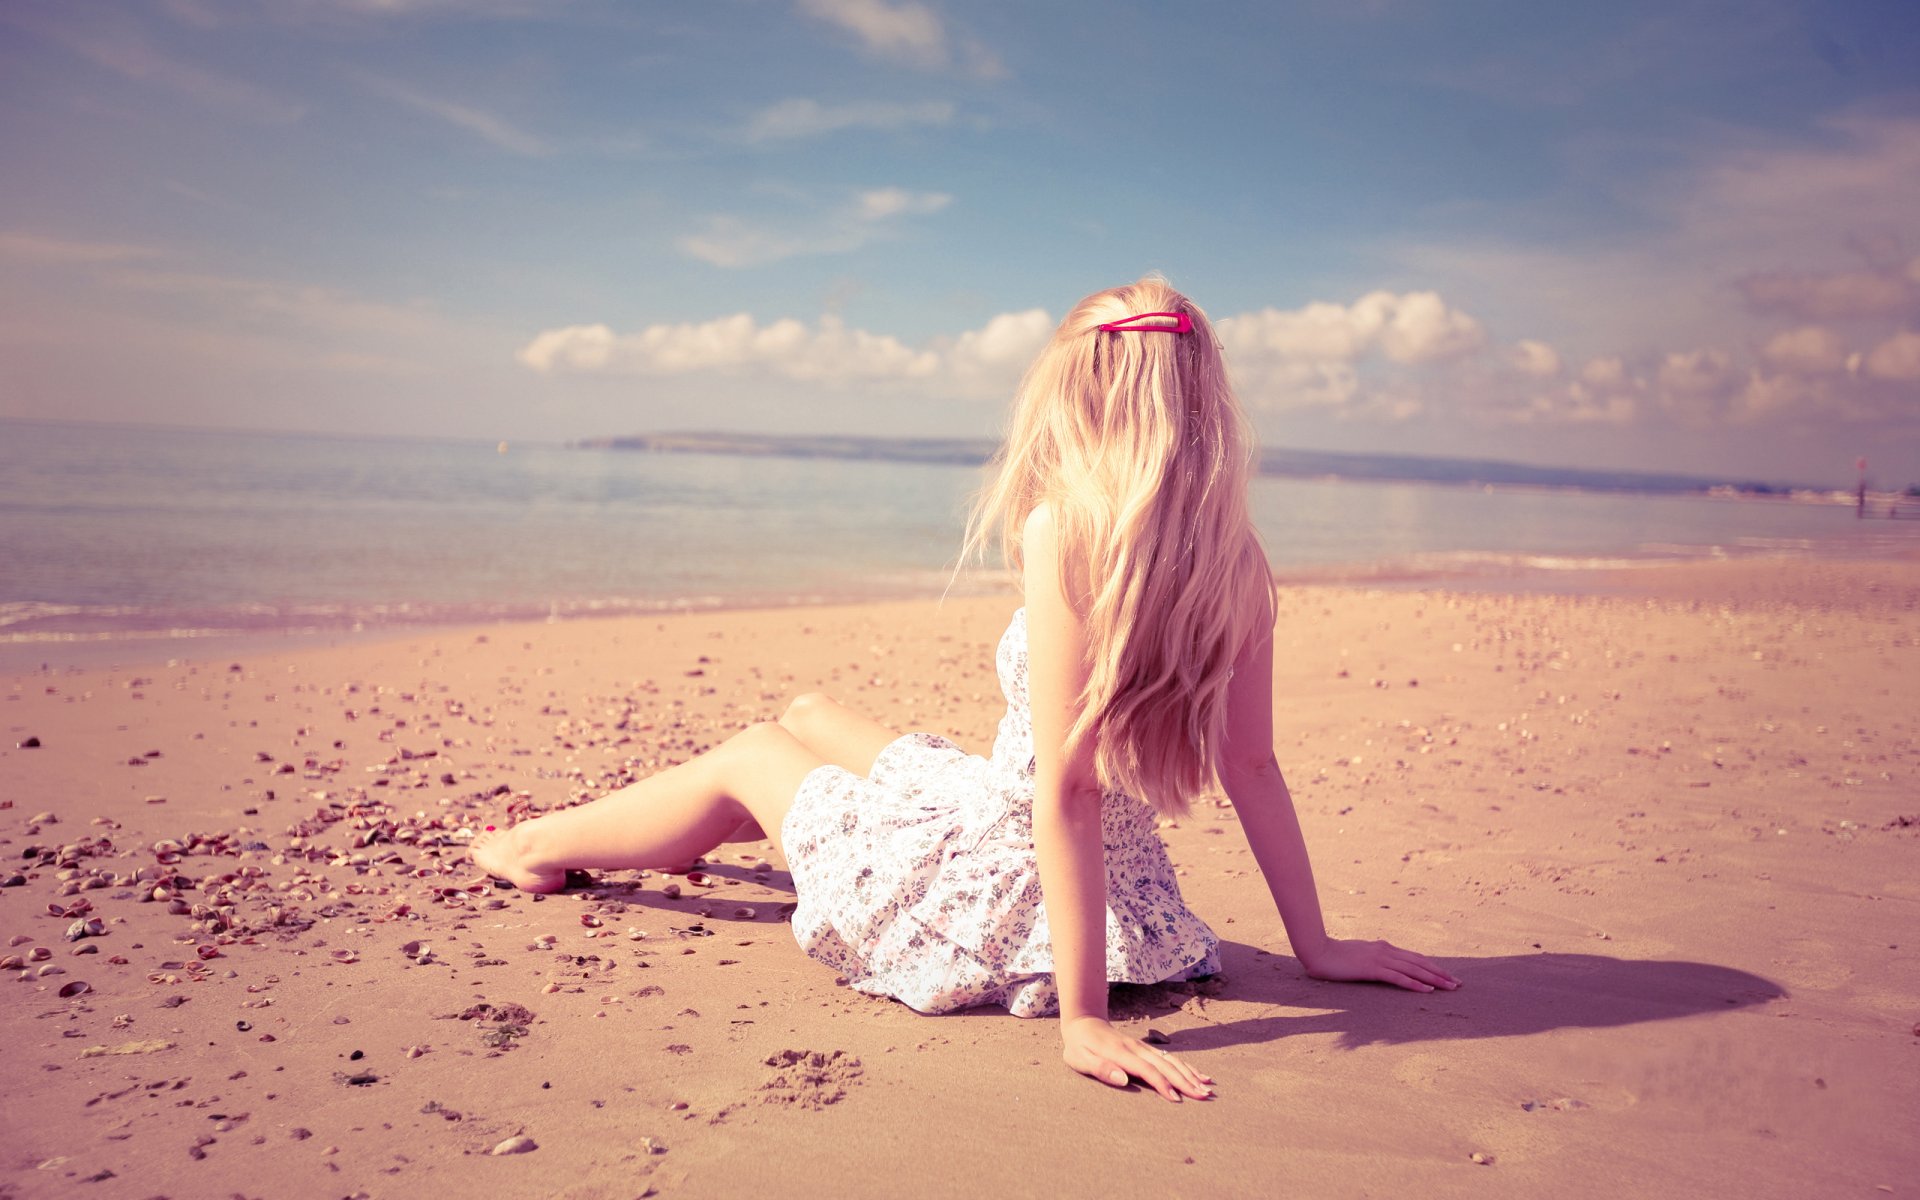 Блондинка на фоне моря